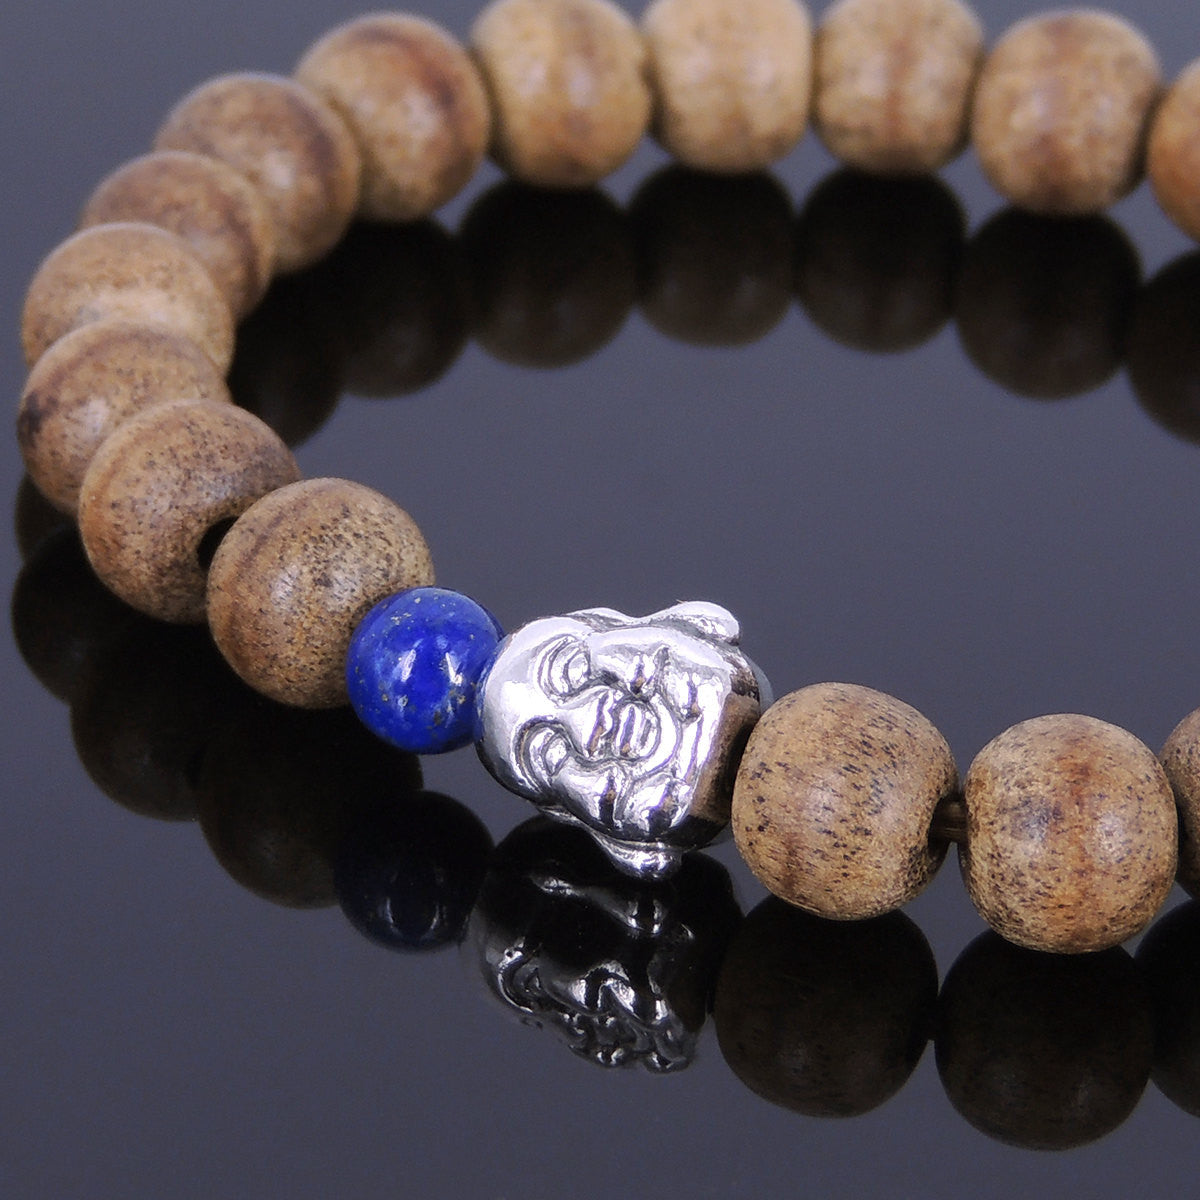 Lapis Lazuli & Agarwood Bracelet for Prayer & Meditation with Tibetan Silver Happy Buddha Courage Bead - Handmade by Gem & Silver AWB003